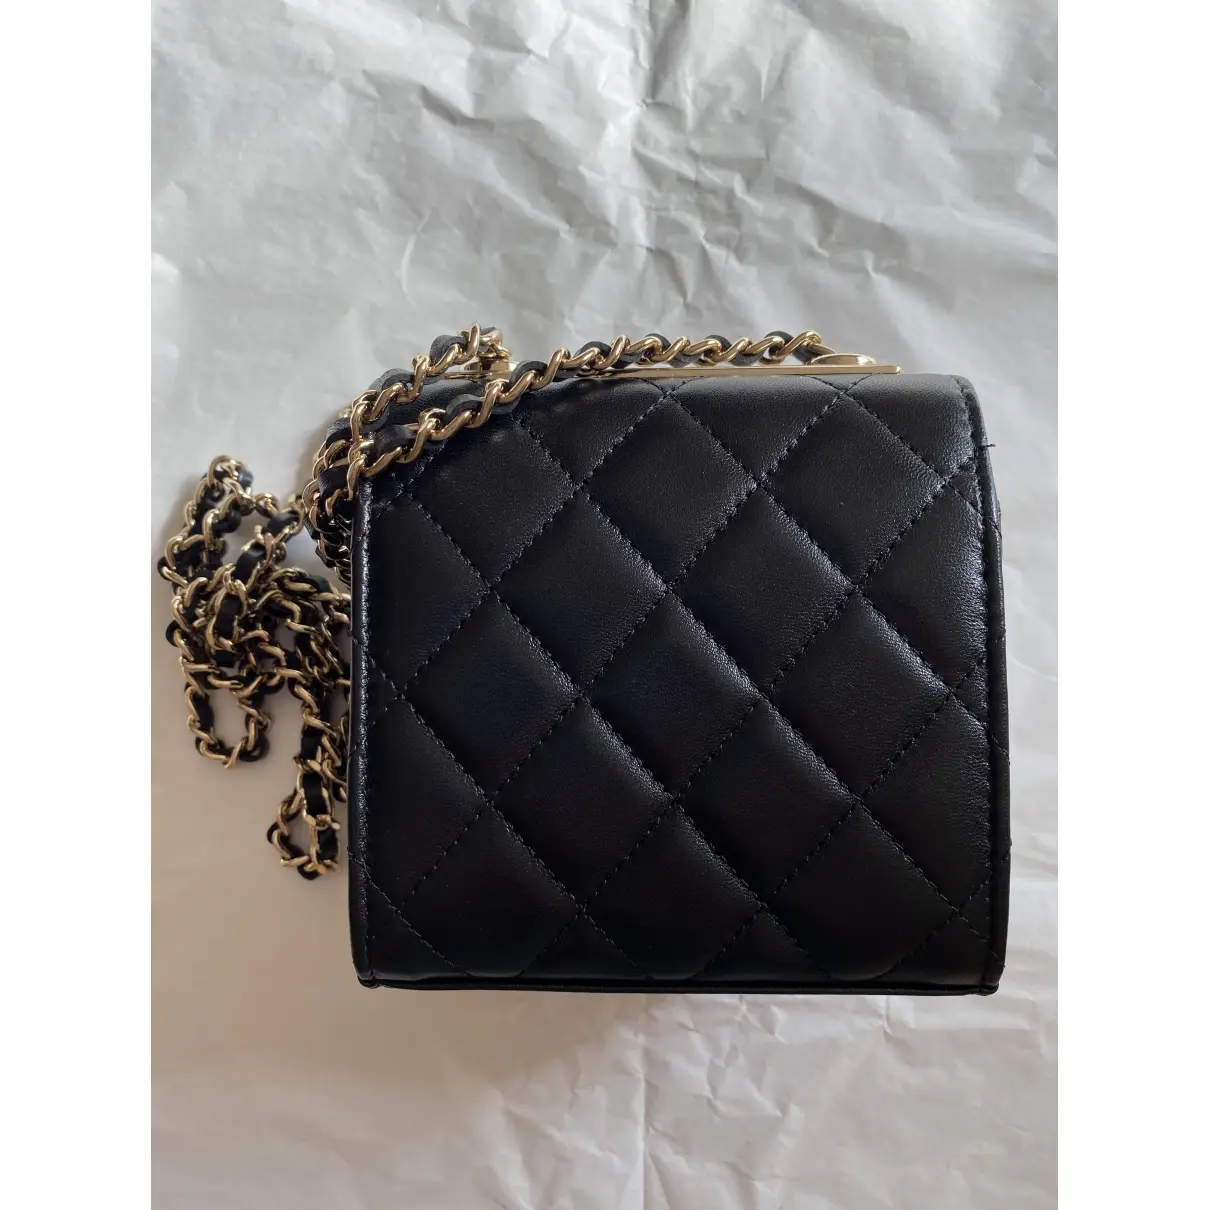 Buy Chanel Trendy CC leather crossbody bag online